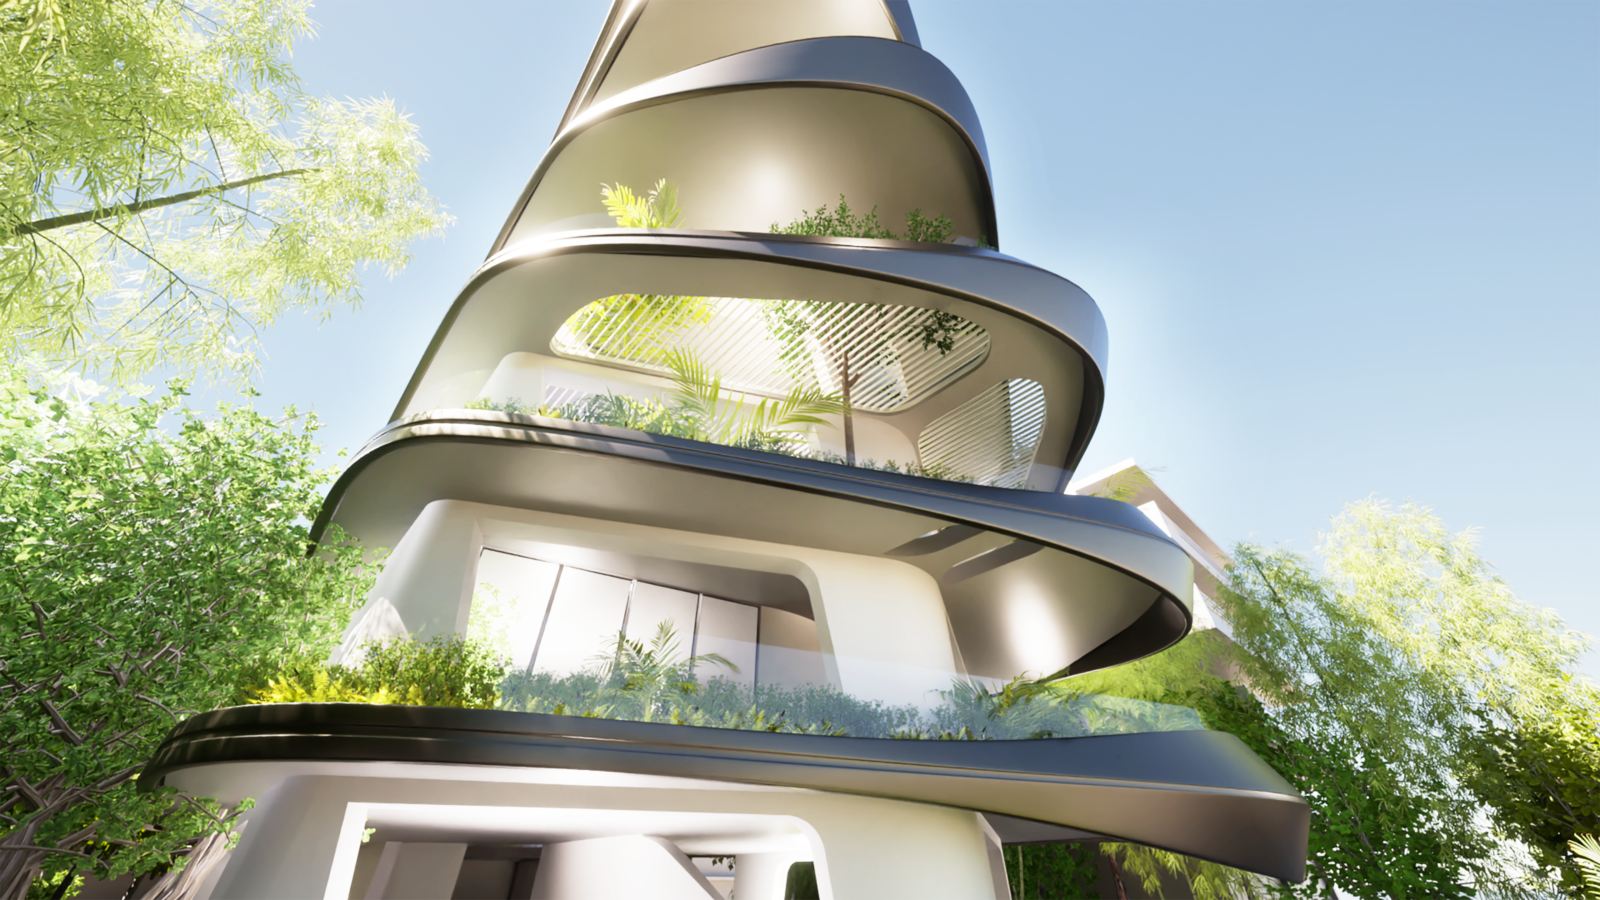 Archisearch ArchitectScripta designed the new OnyxFLY luxury apartment building.